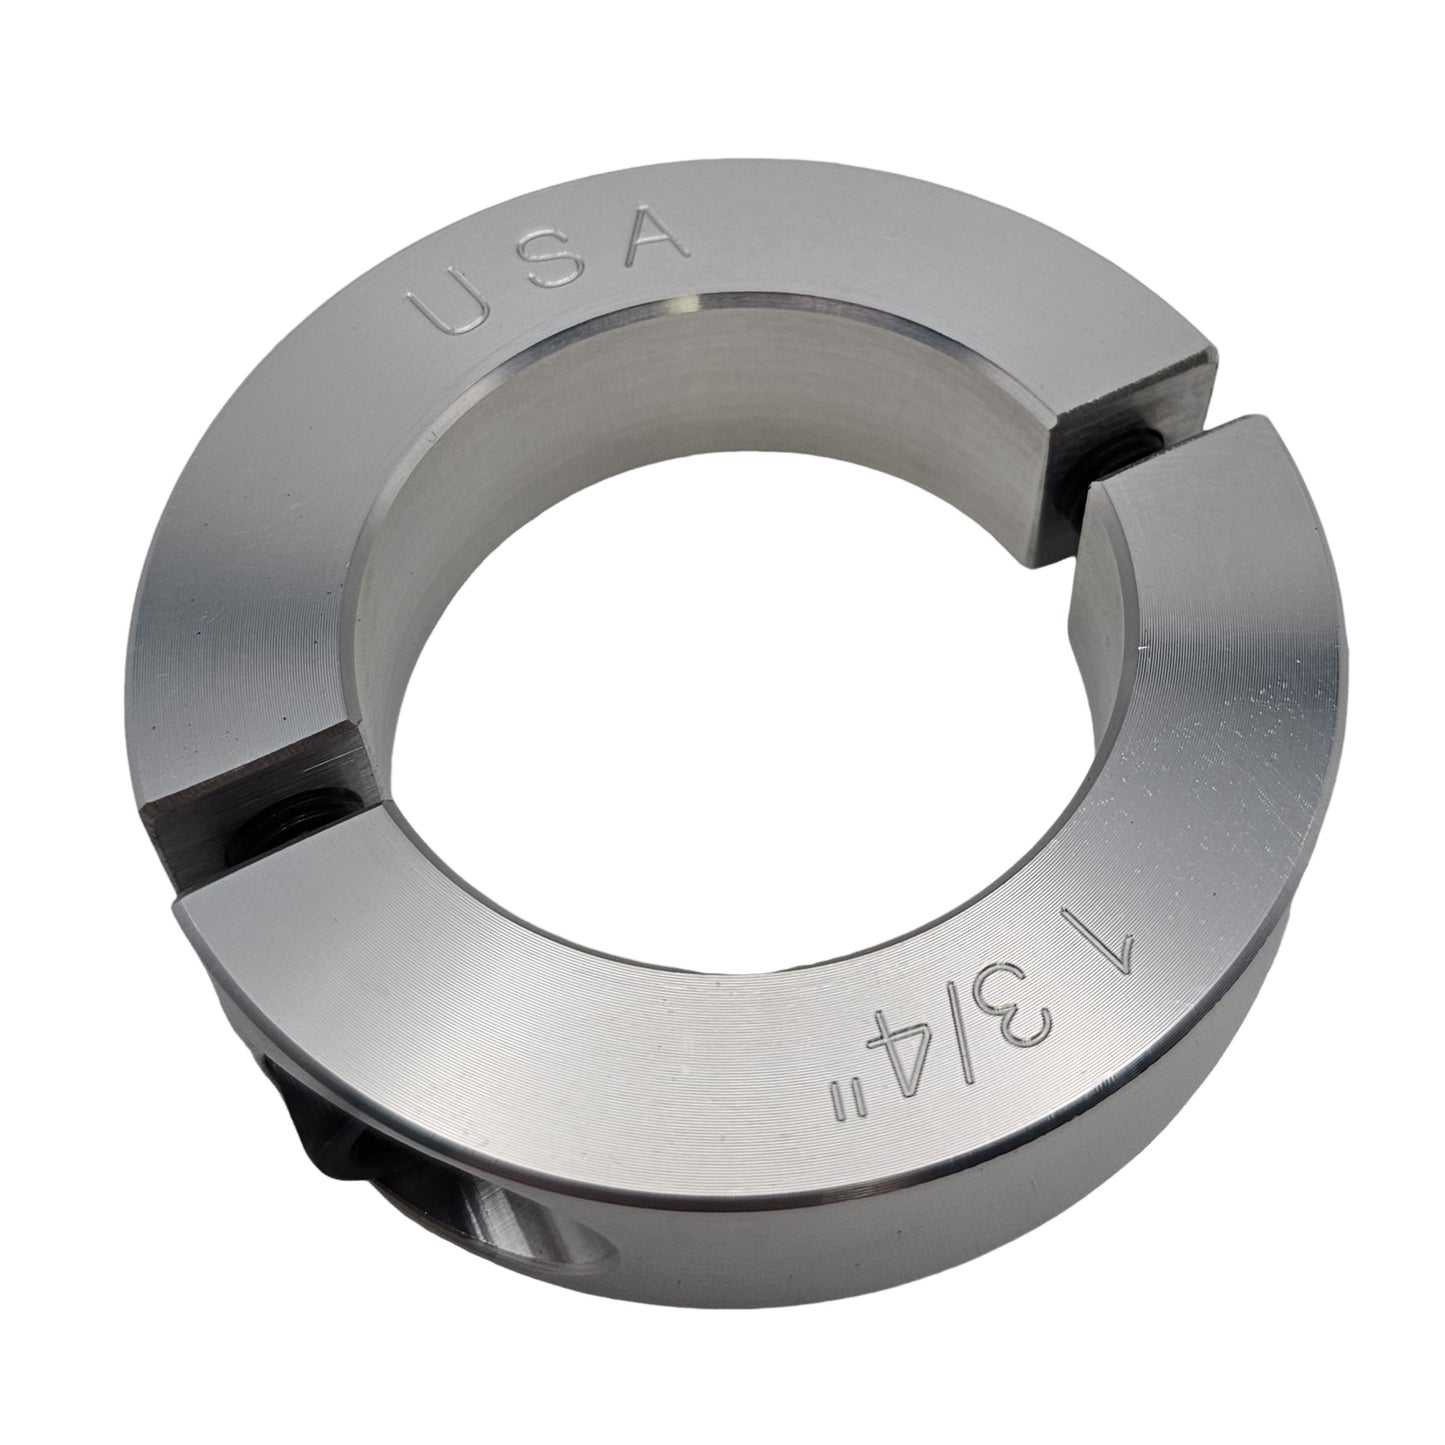 1.75" Diameter - Clamping Two Piece Shaft Collar - 2024 Aluminum